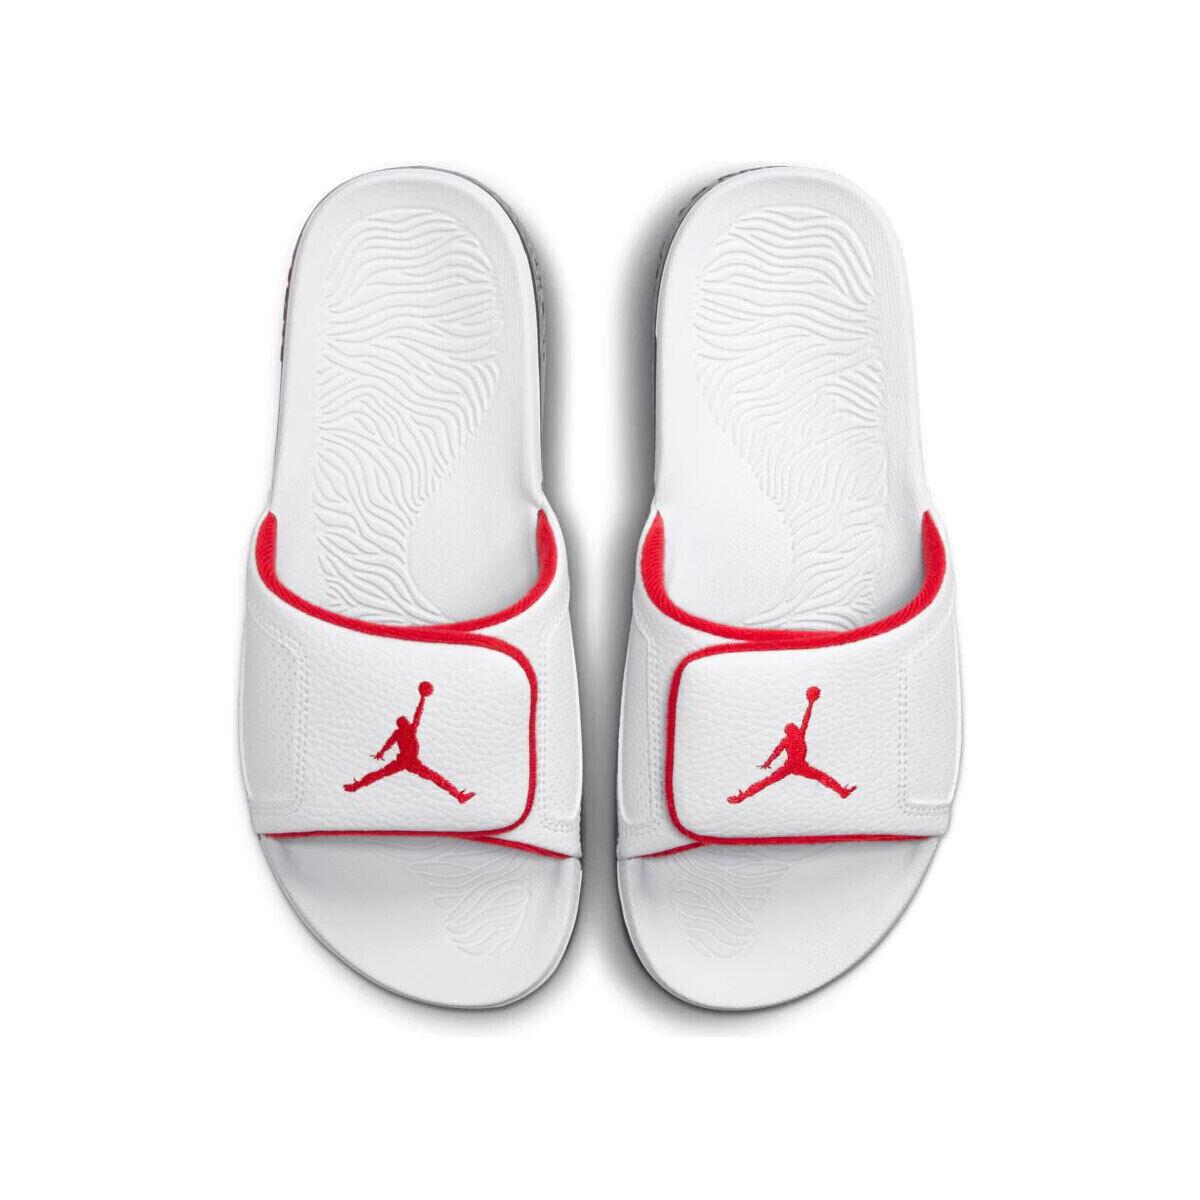 Nike Air Jordan Hydro Iii 3 Retro White Red Slides 854556 103 - Size 8 Mens